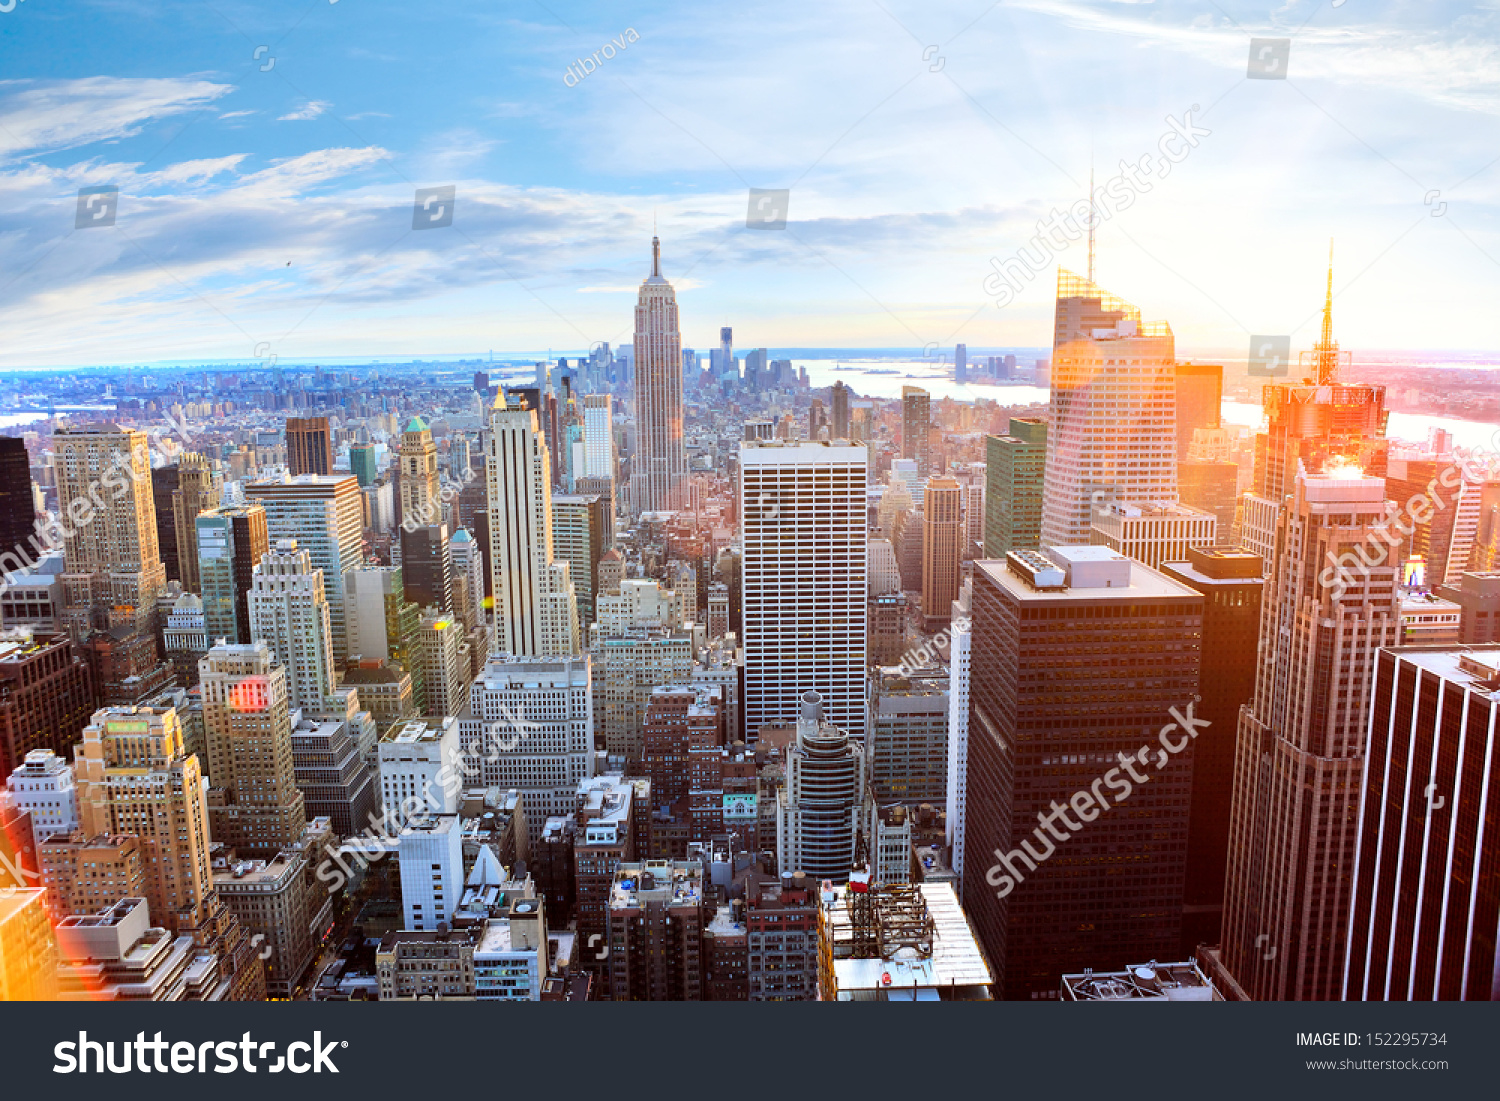 Aerial view of Manhattan skyline at sunset, New York City #152295734